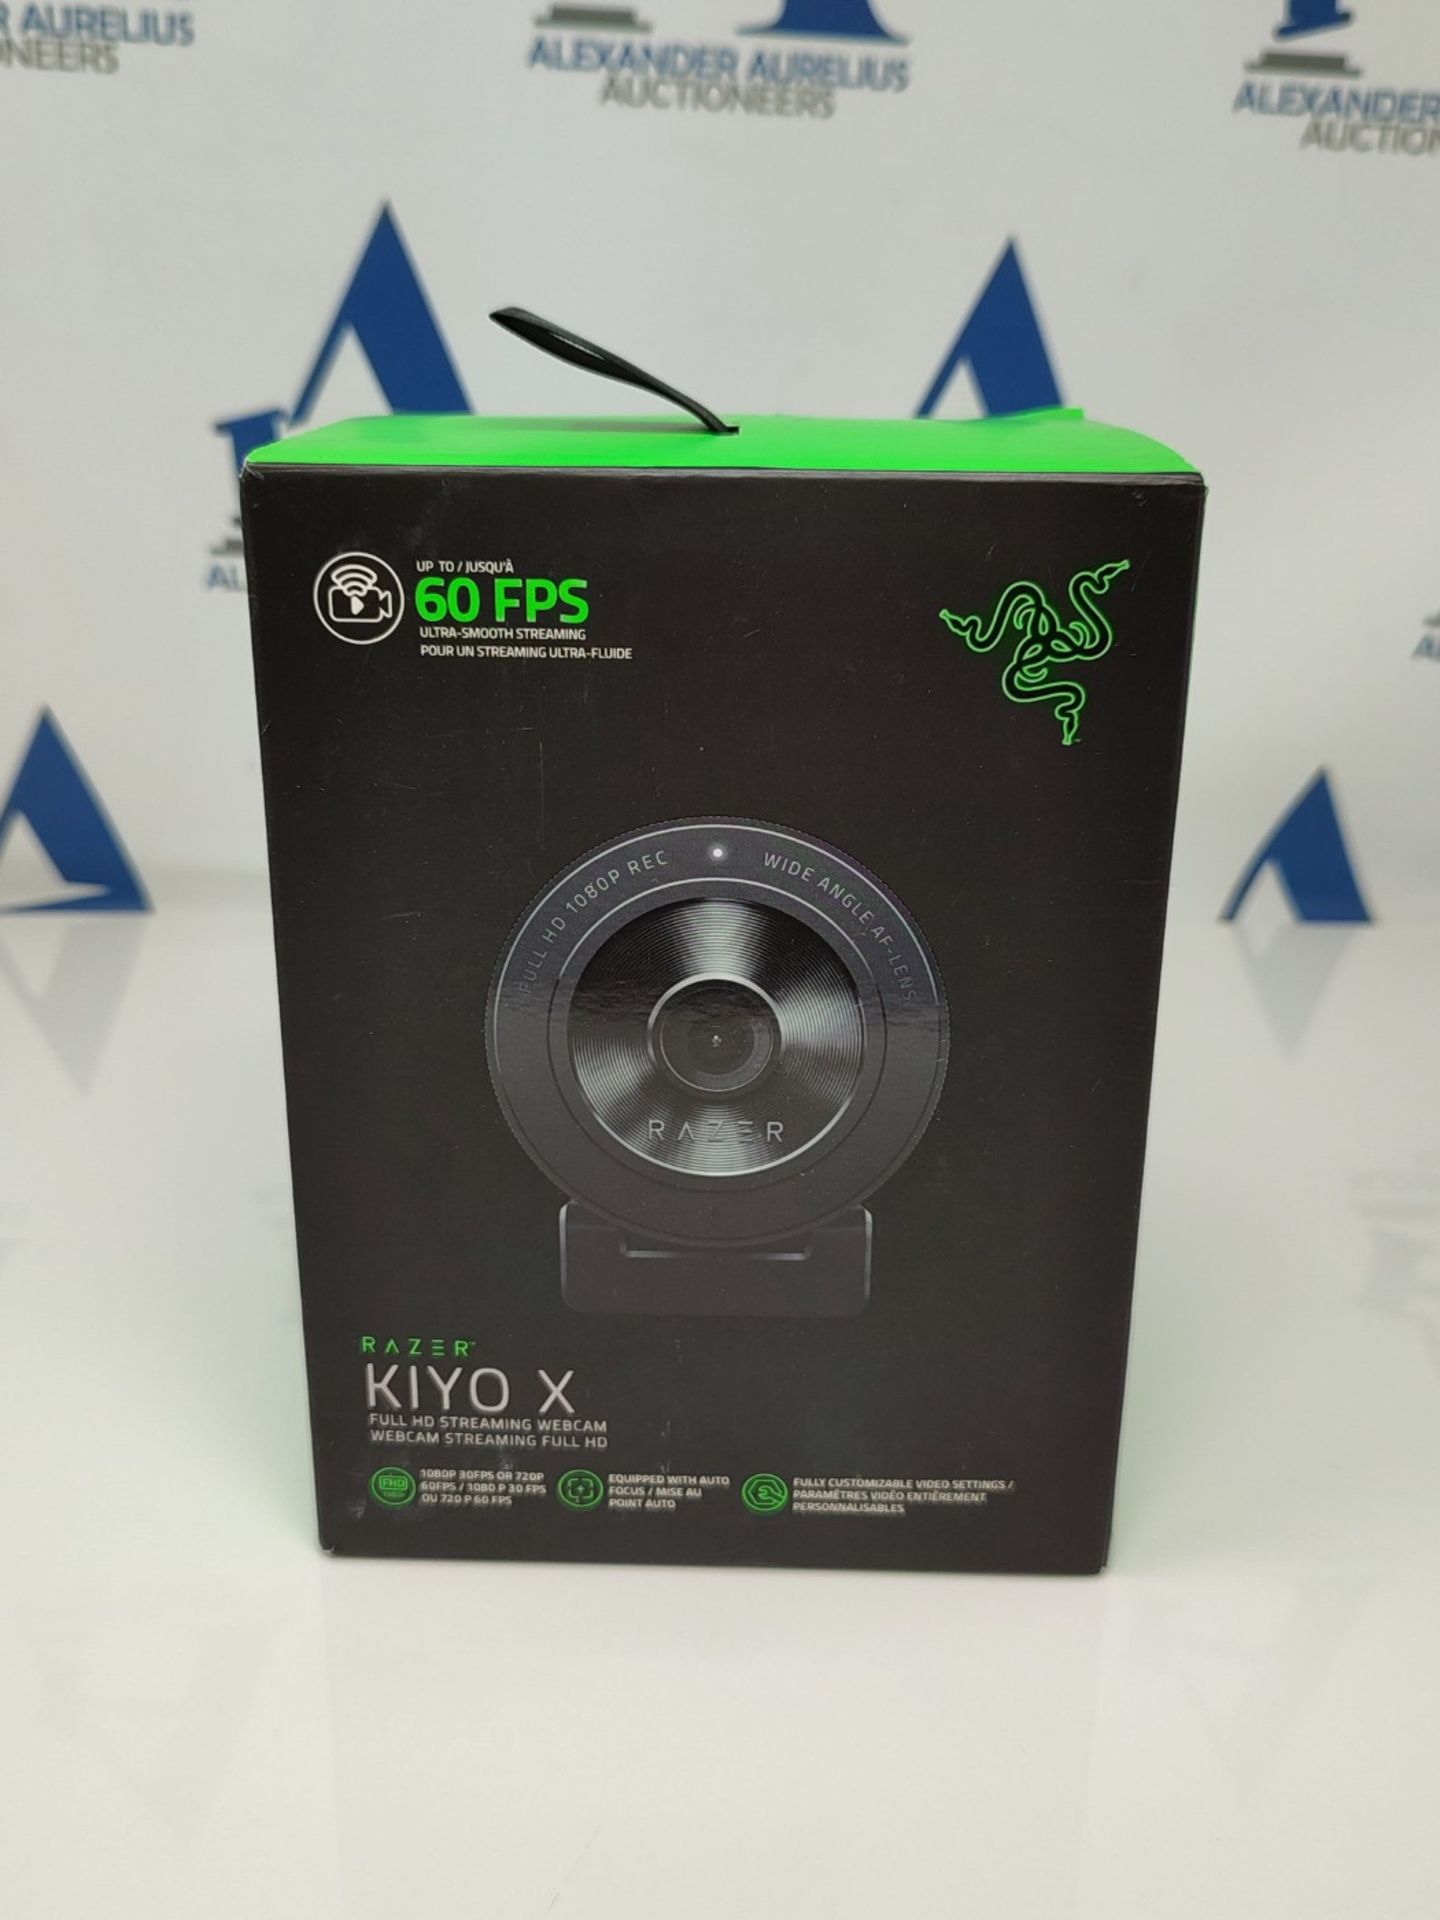 Razer Kiyo X - USB webcam for full HD streaming - 1080p Full HD - auto focus - black - Image 2 of 3